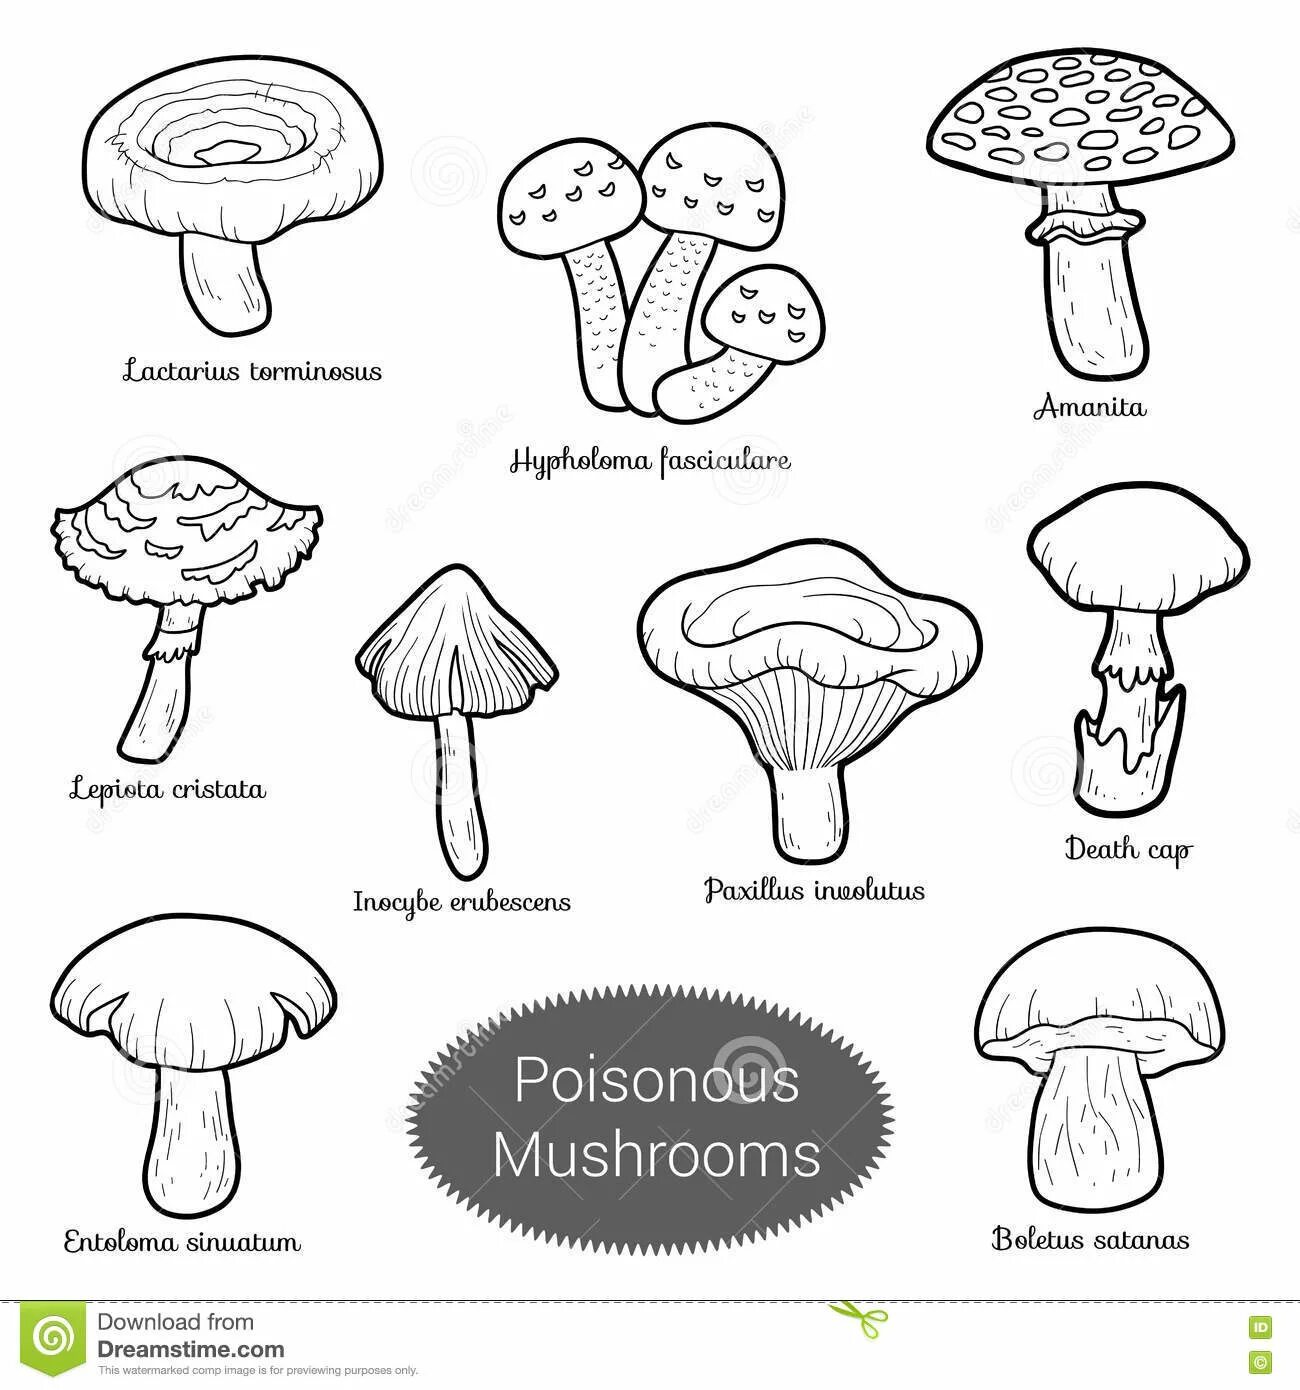 Charm of non-edible mushrooms for children